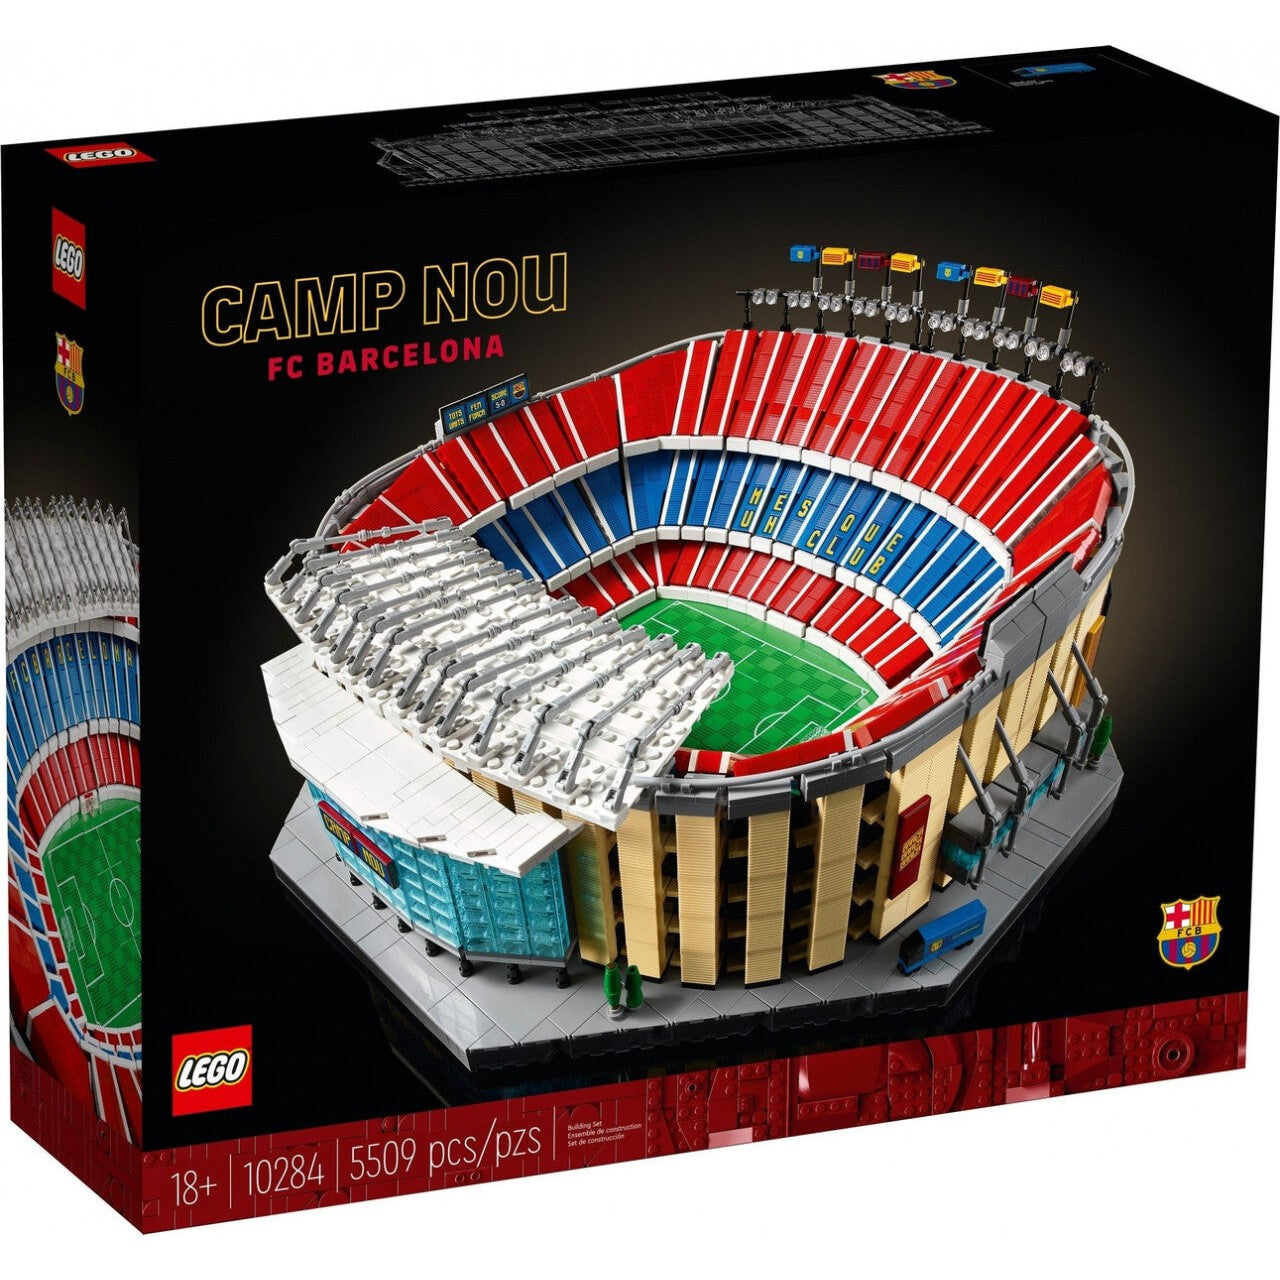 LEGO 10284 Creator Expert Camp Nou - FC Barcelona